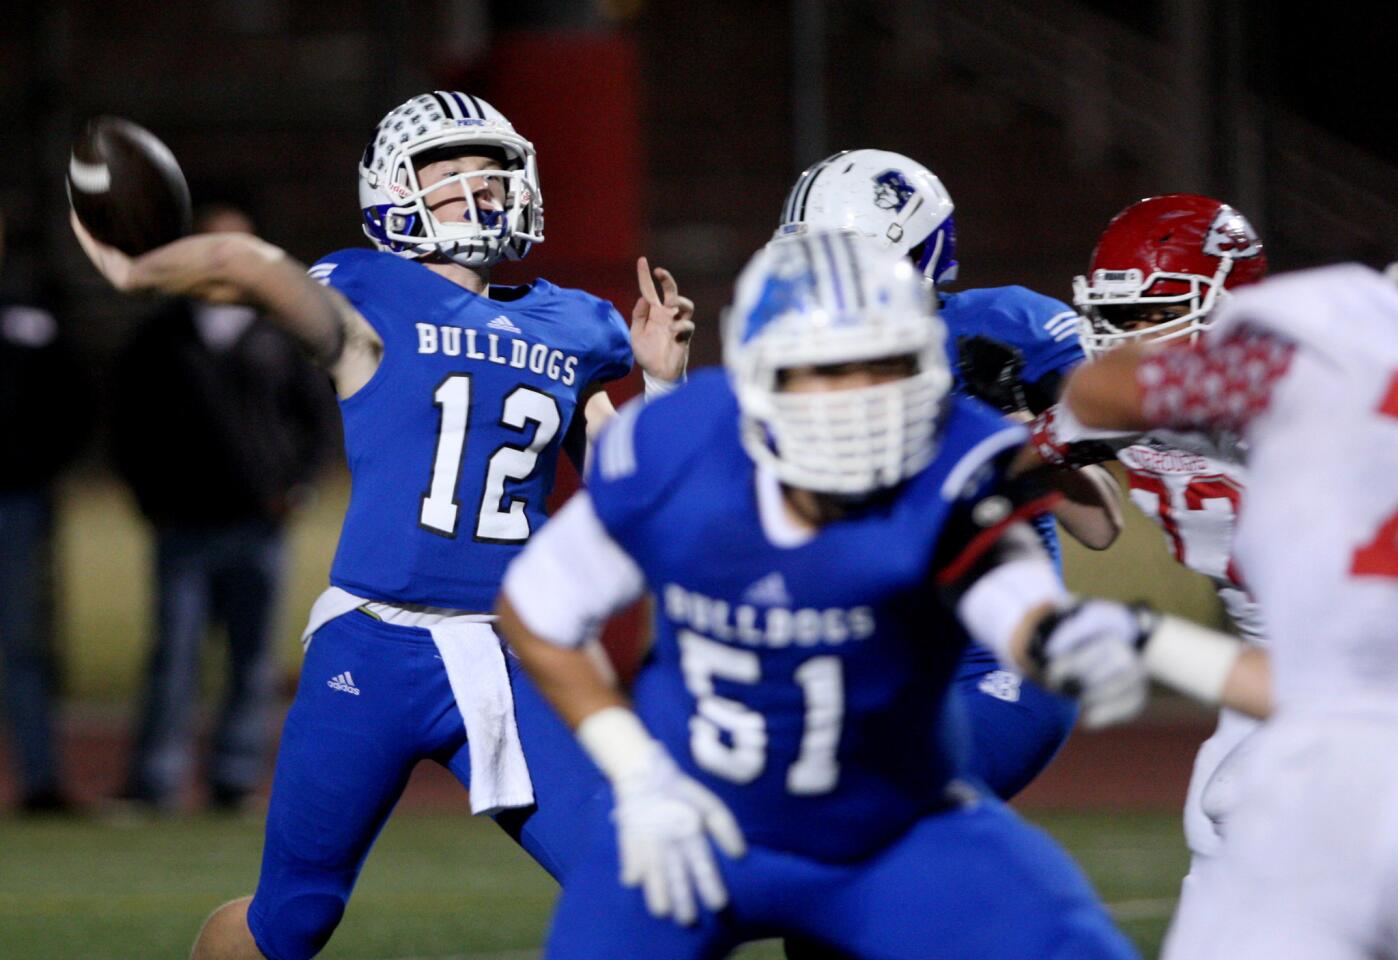 Photo Gallery: Burbank High School vs. Burroughs High School football game